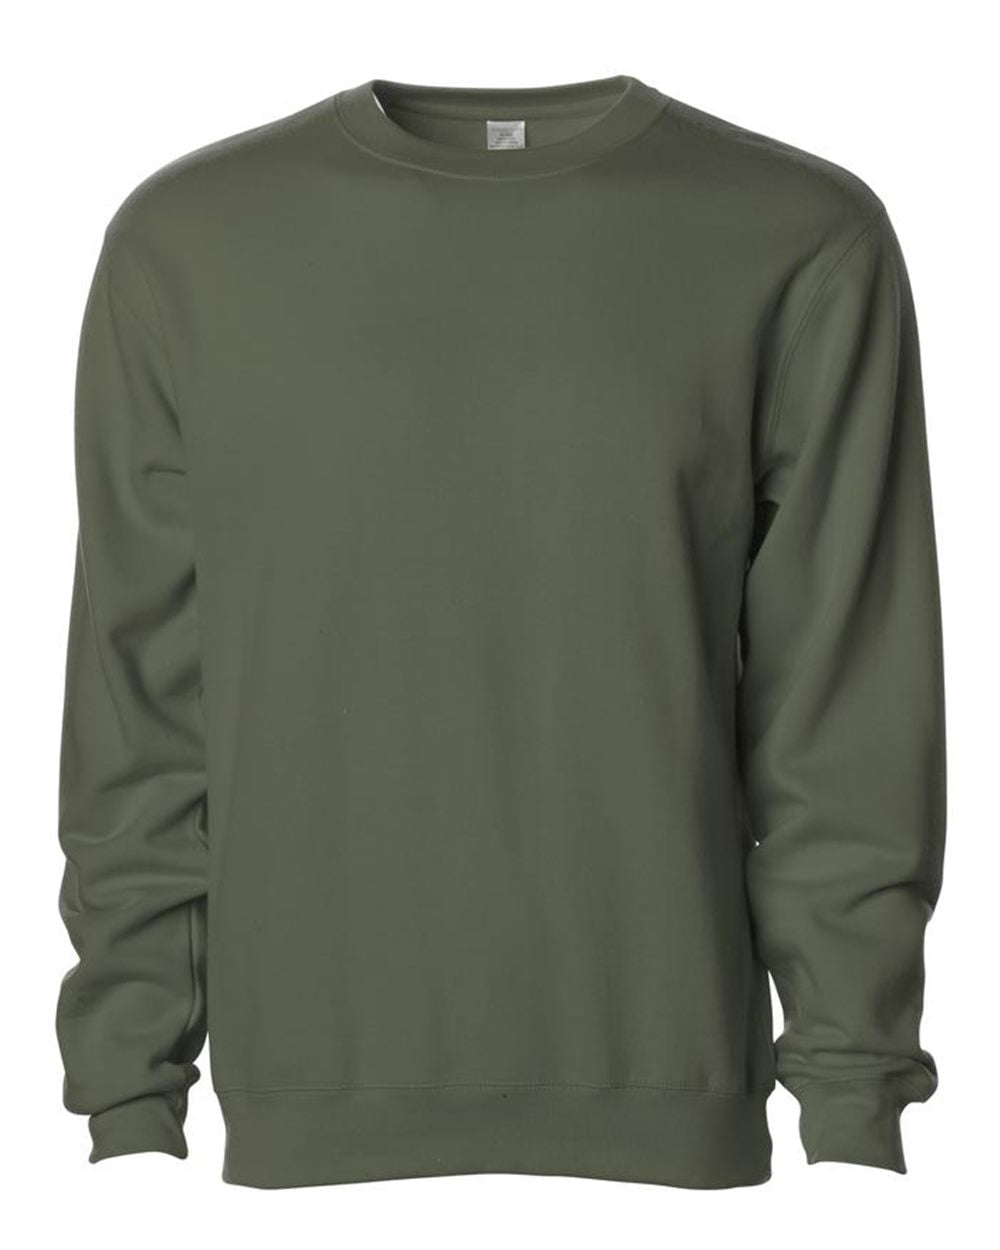 independent trading co crewneck sweatshirt army green